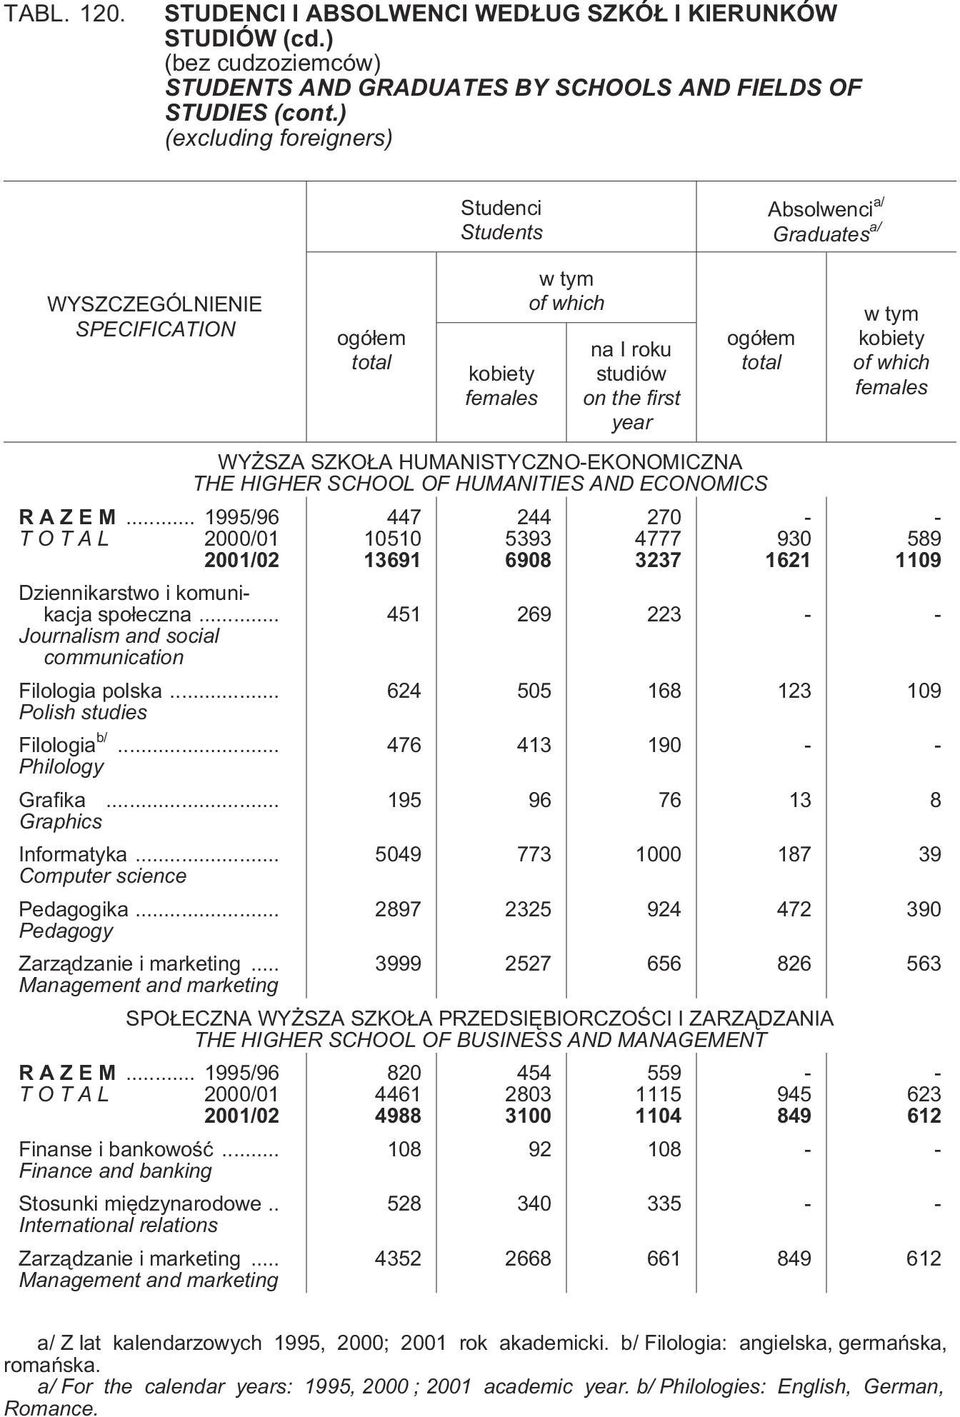 Filologia polska... 624 505 168 123 109 Polish studies Filologia b/... 476 413 190 Philology Grafika... 195 96 76 13 8 Graphics Informatyka... 5049 773 1000 187 39 Computer science Pedagogika.